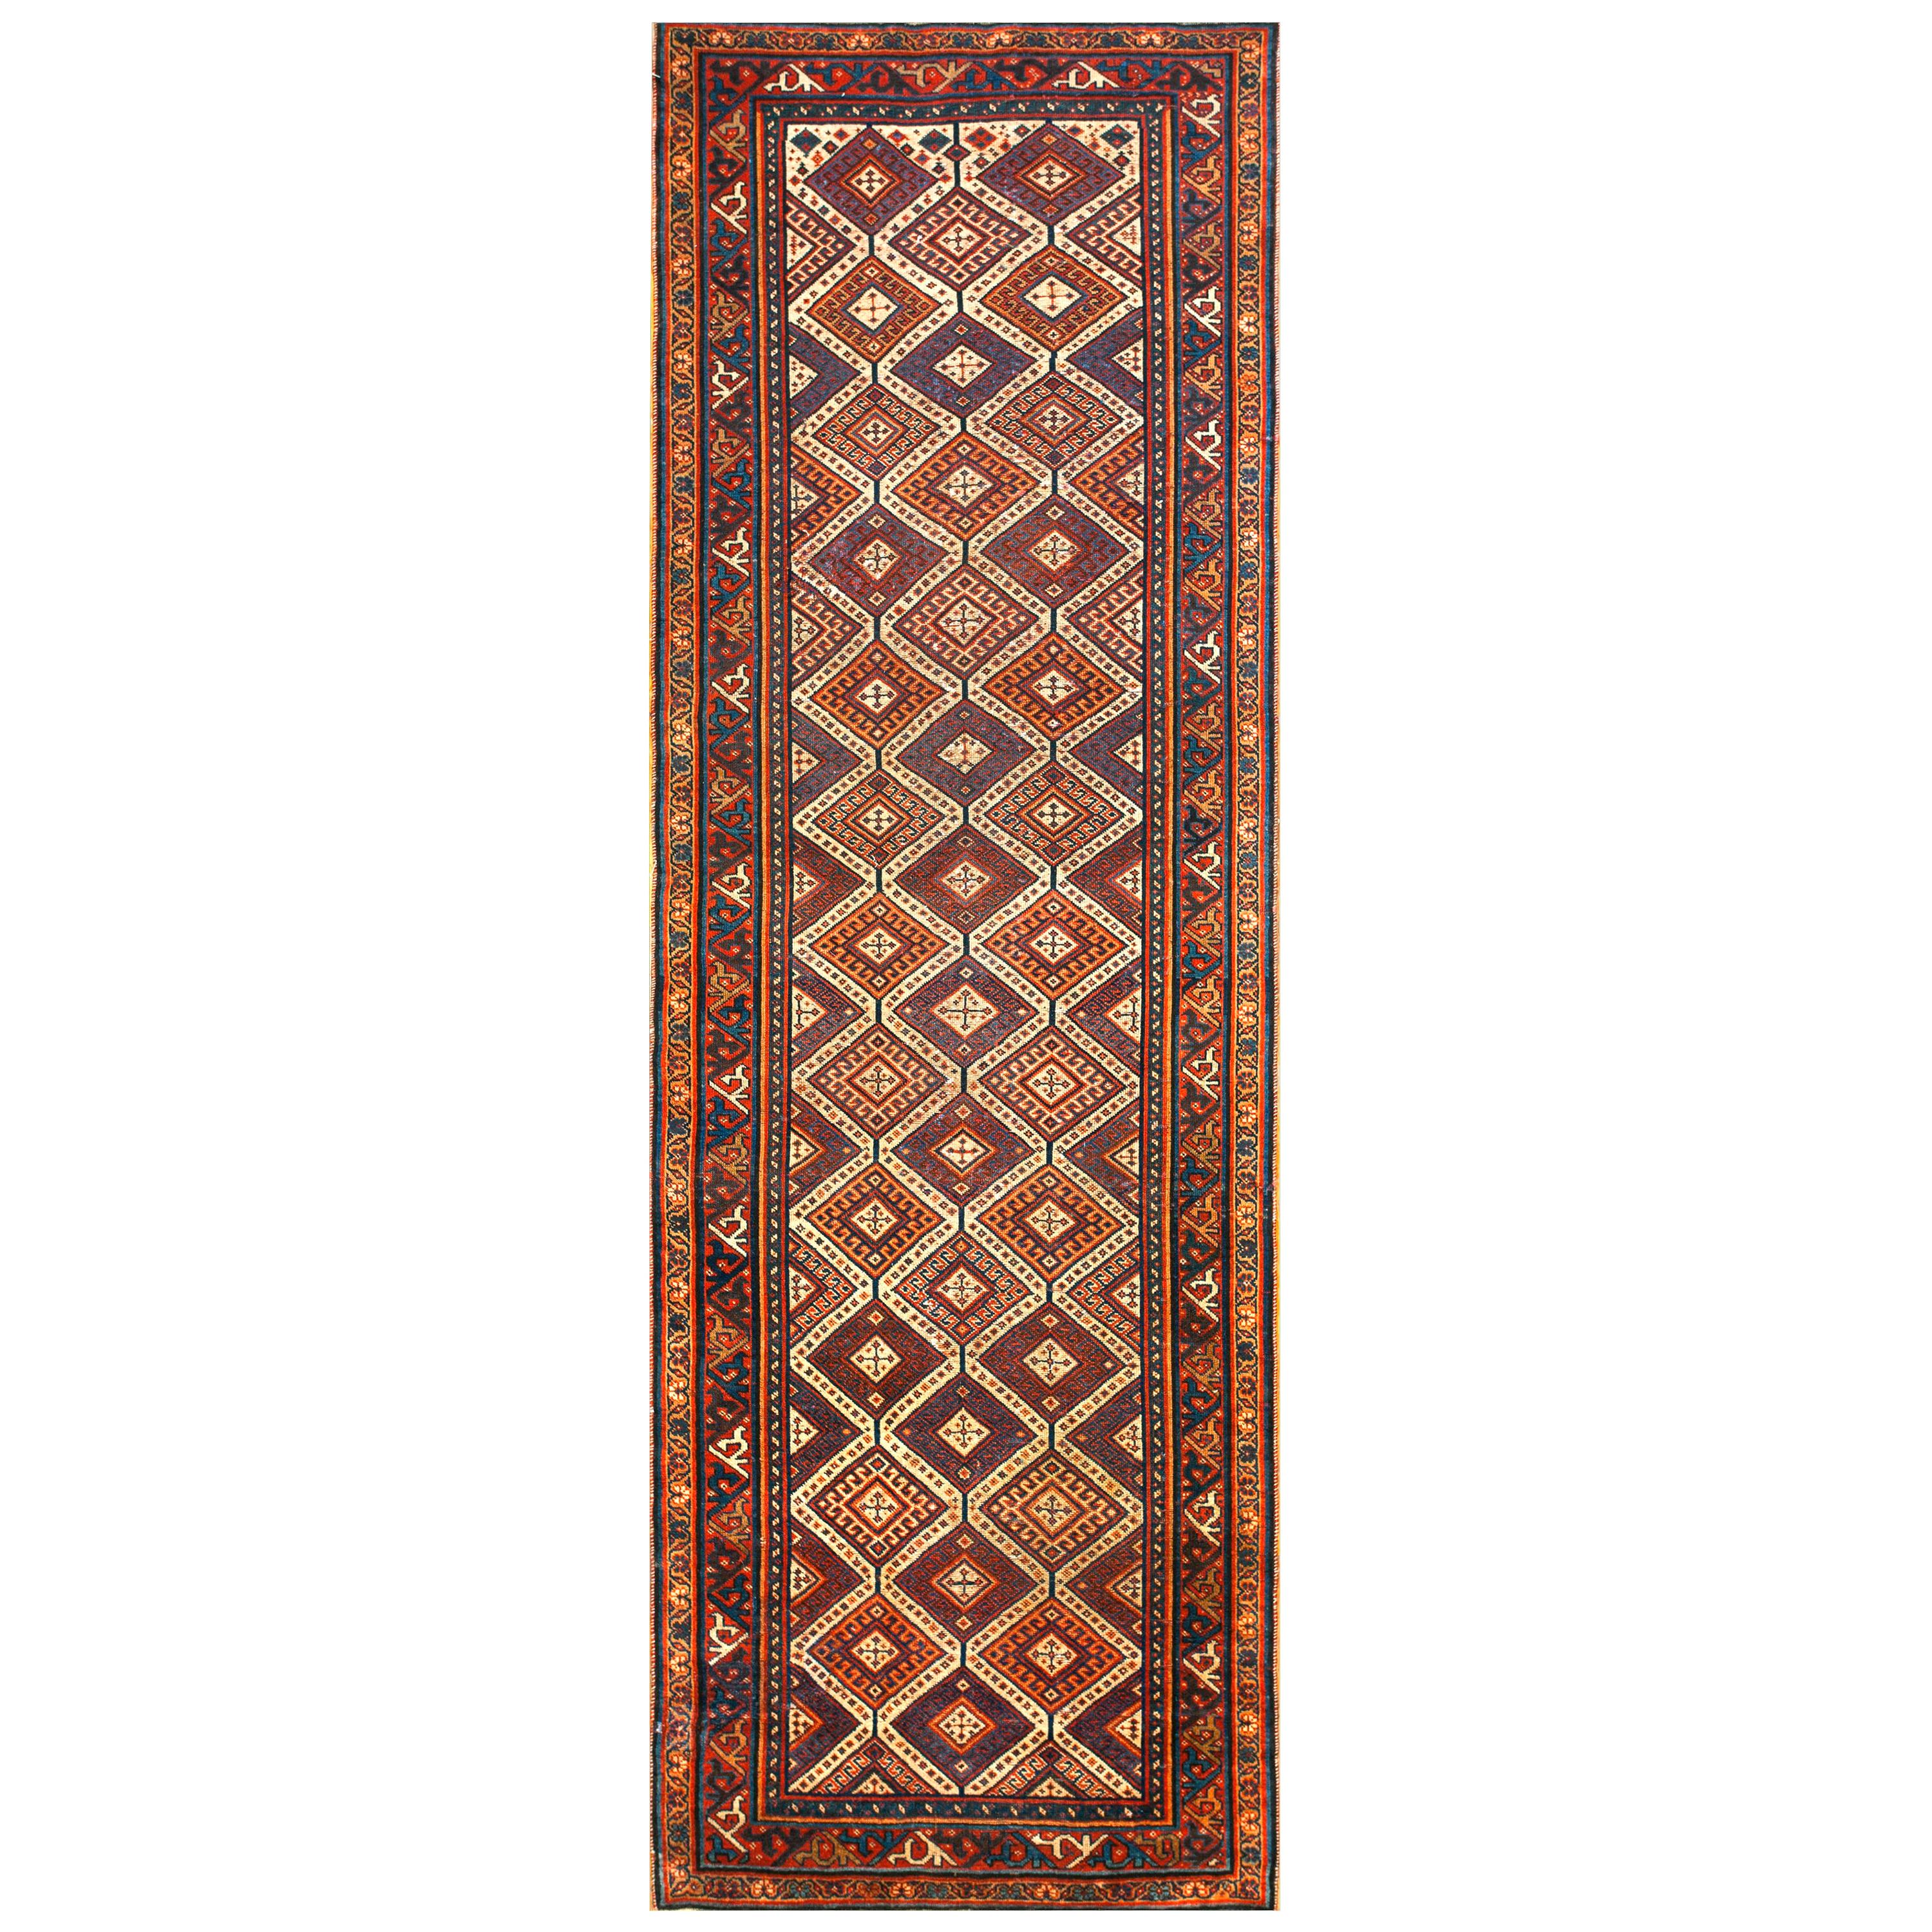 Late 19th Century S.E. Persian Afshar Carpet ( 4' x 12'2" - 122 x 370 )